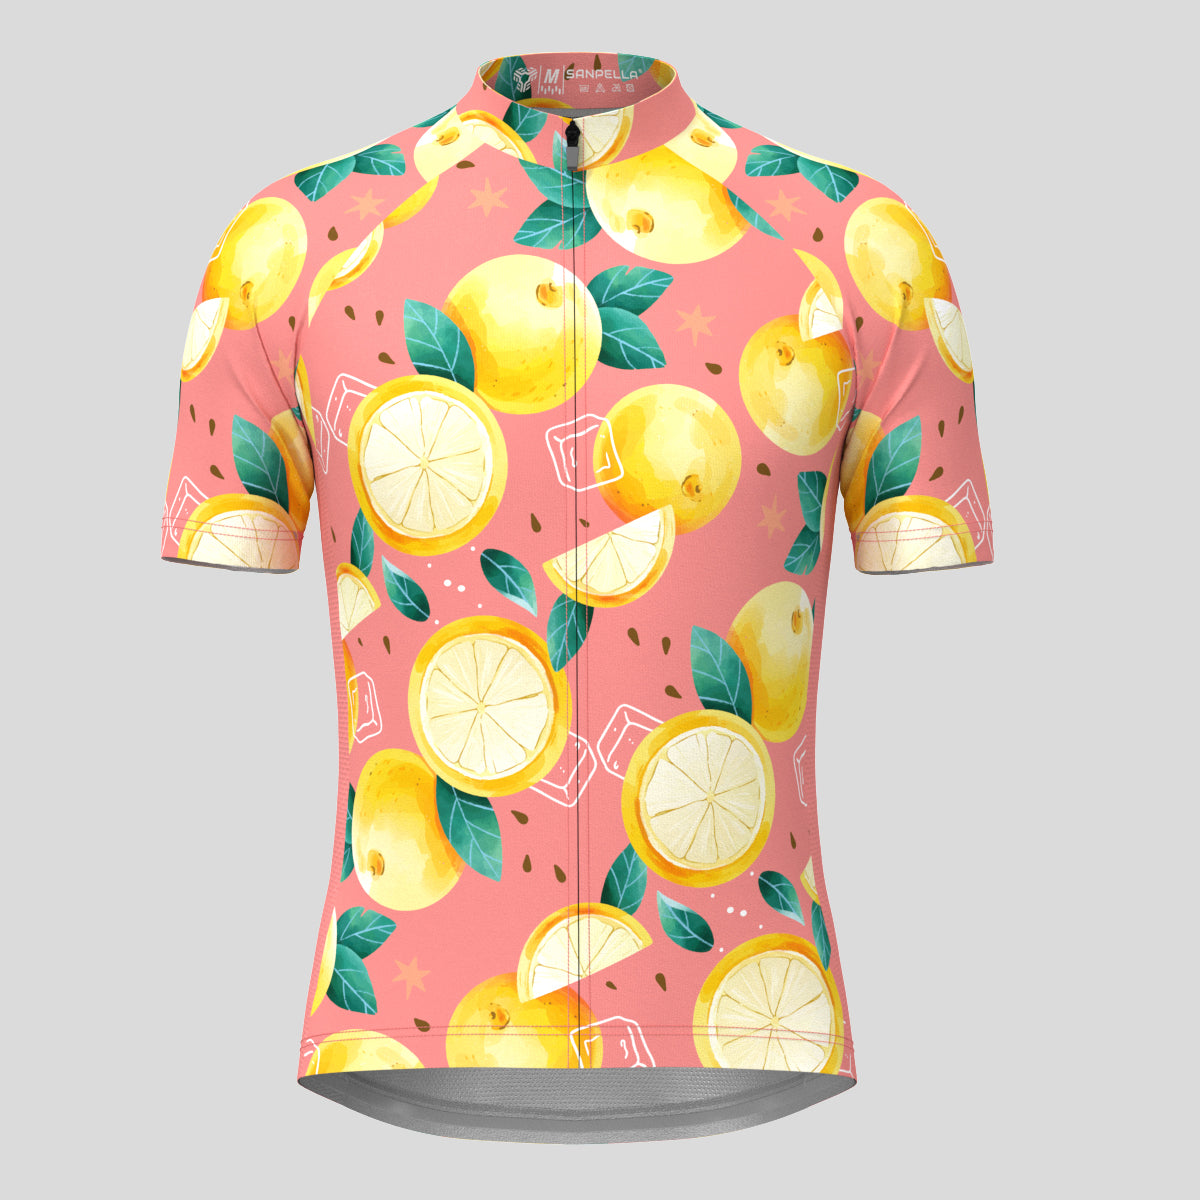 Classic Orange Men's Cycling Jersey - Pink